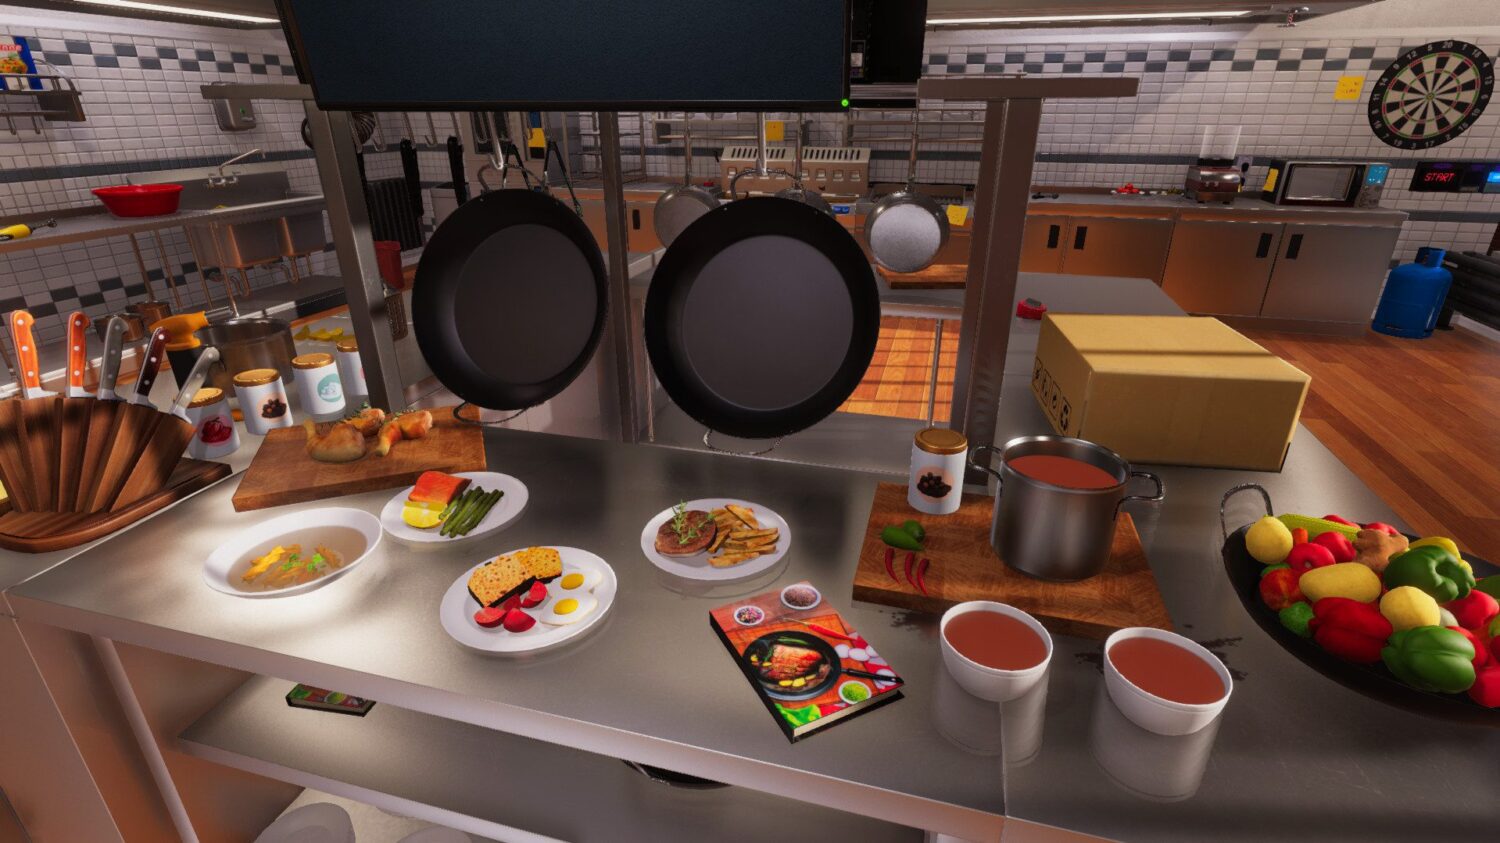 cooking-simulator